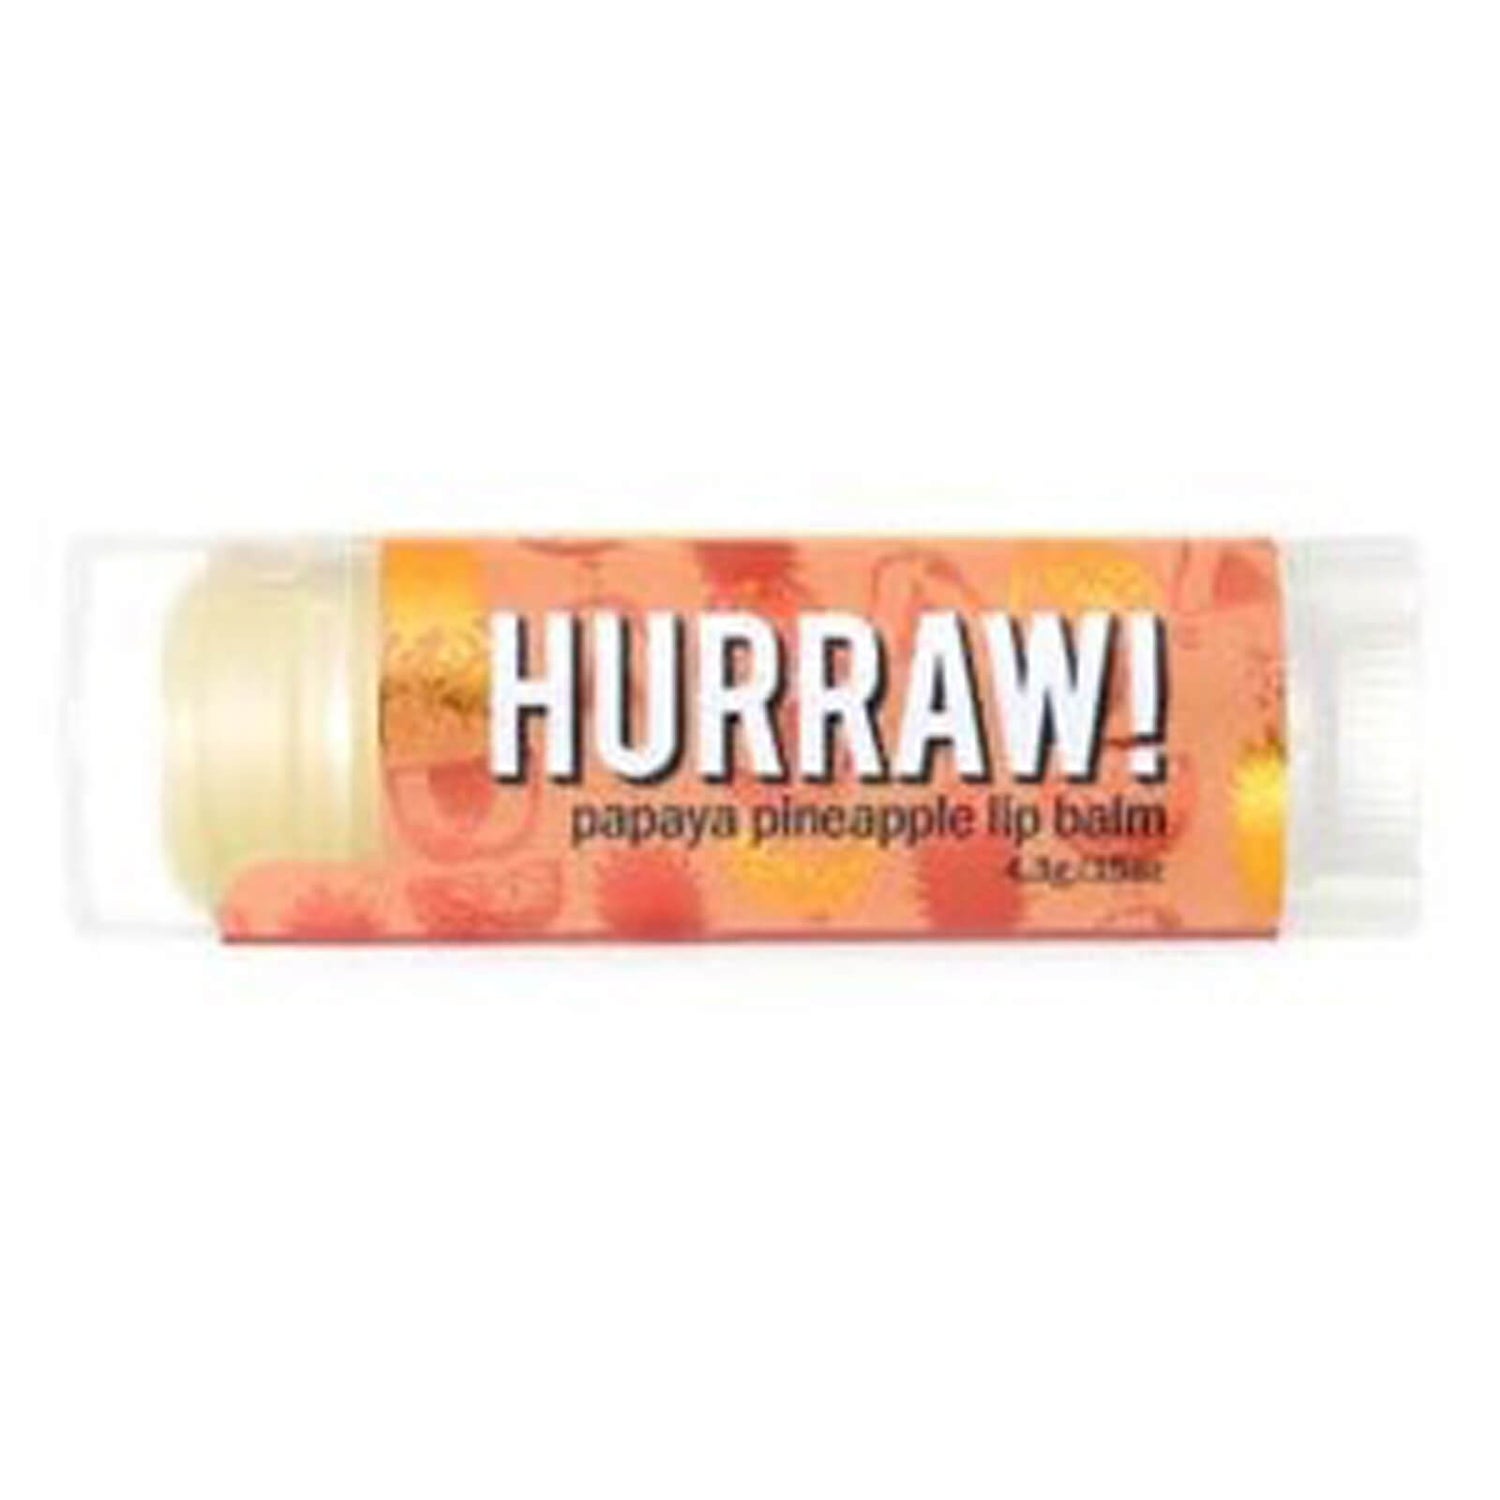 Hurraw! Papaya Pineapple Lip Balm 4.3g